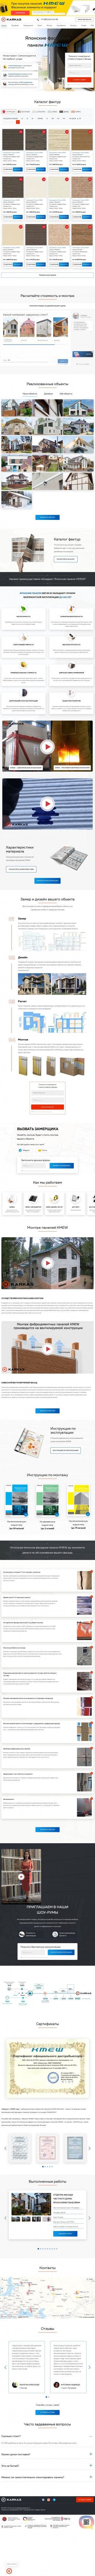 Предпросмотр для fasad.karkas.ru — Каркас.ру